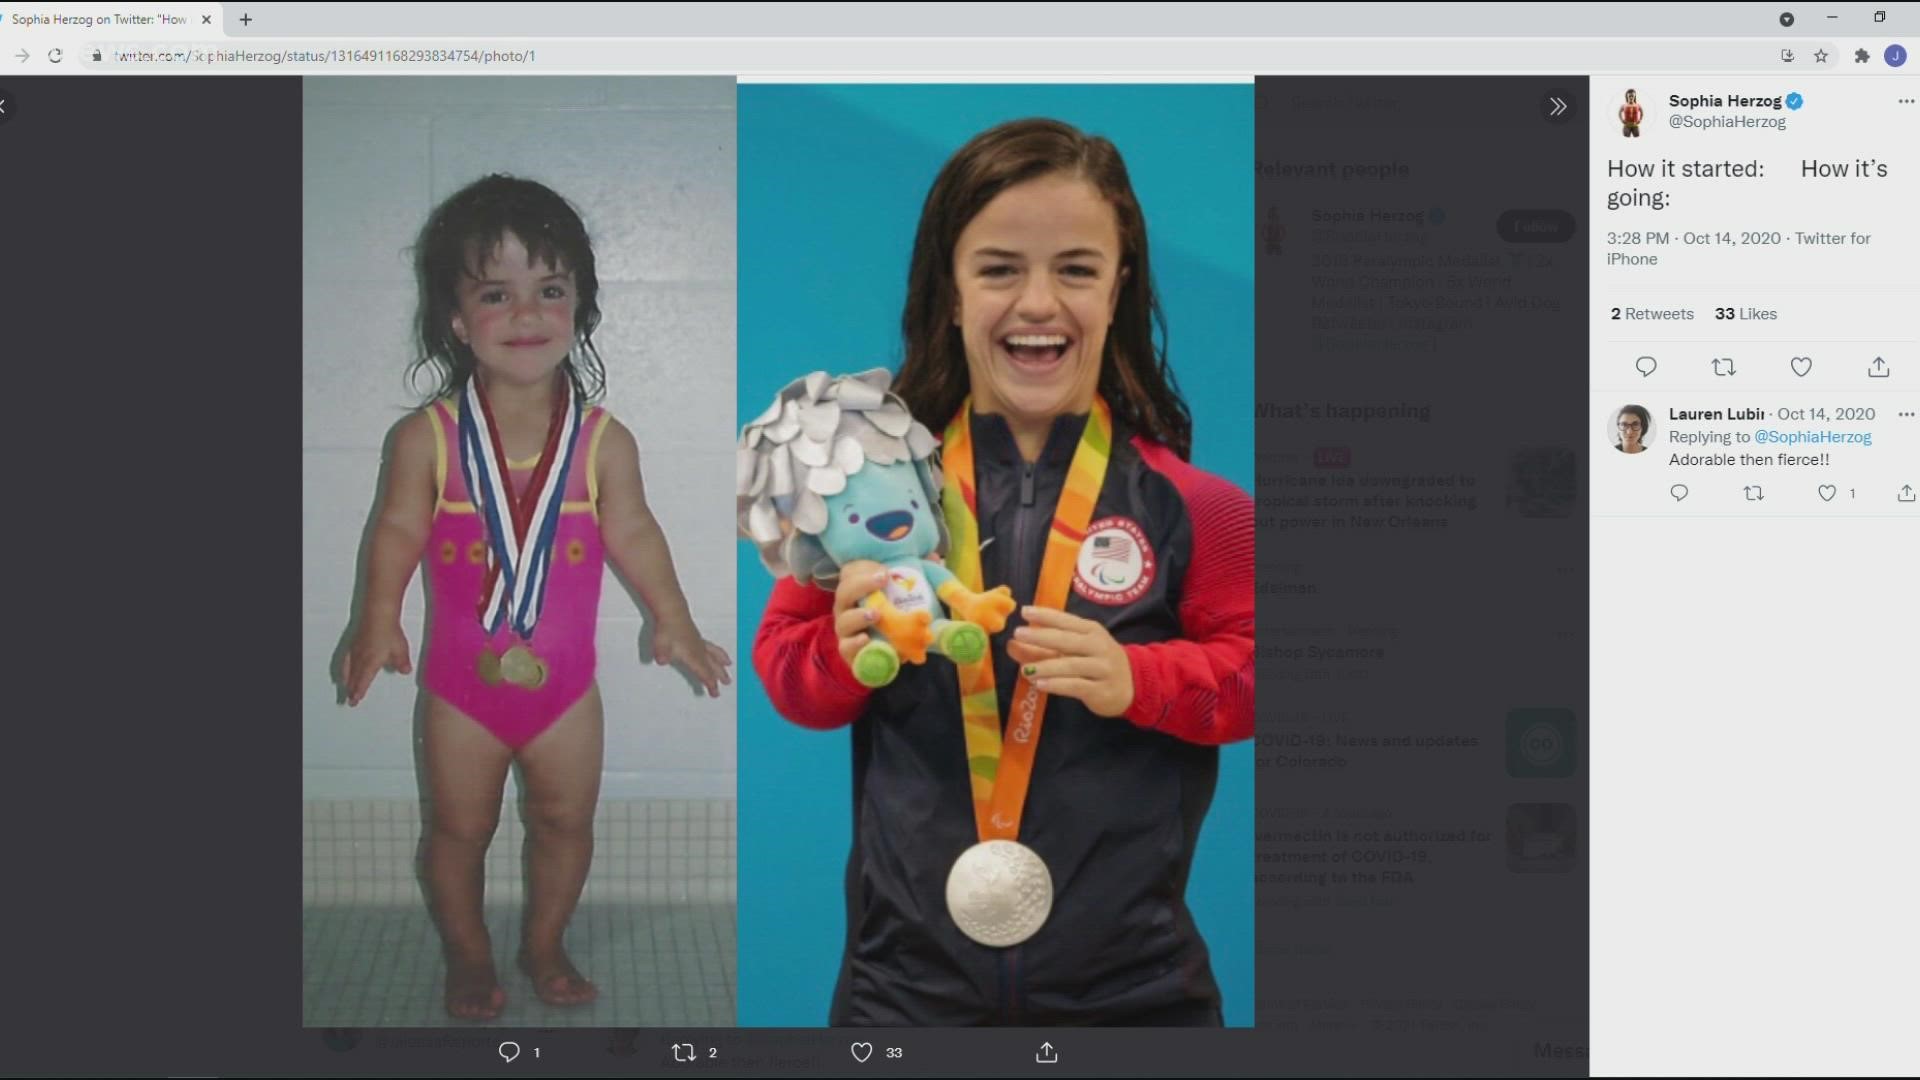 Coloradan and Paralympian swimmer, Sophia Herzog, took bronze in the 100-meter breast-stroke.